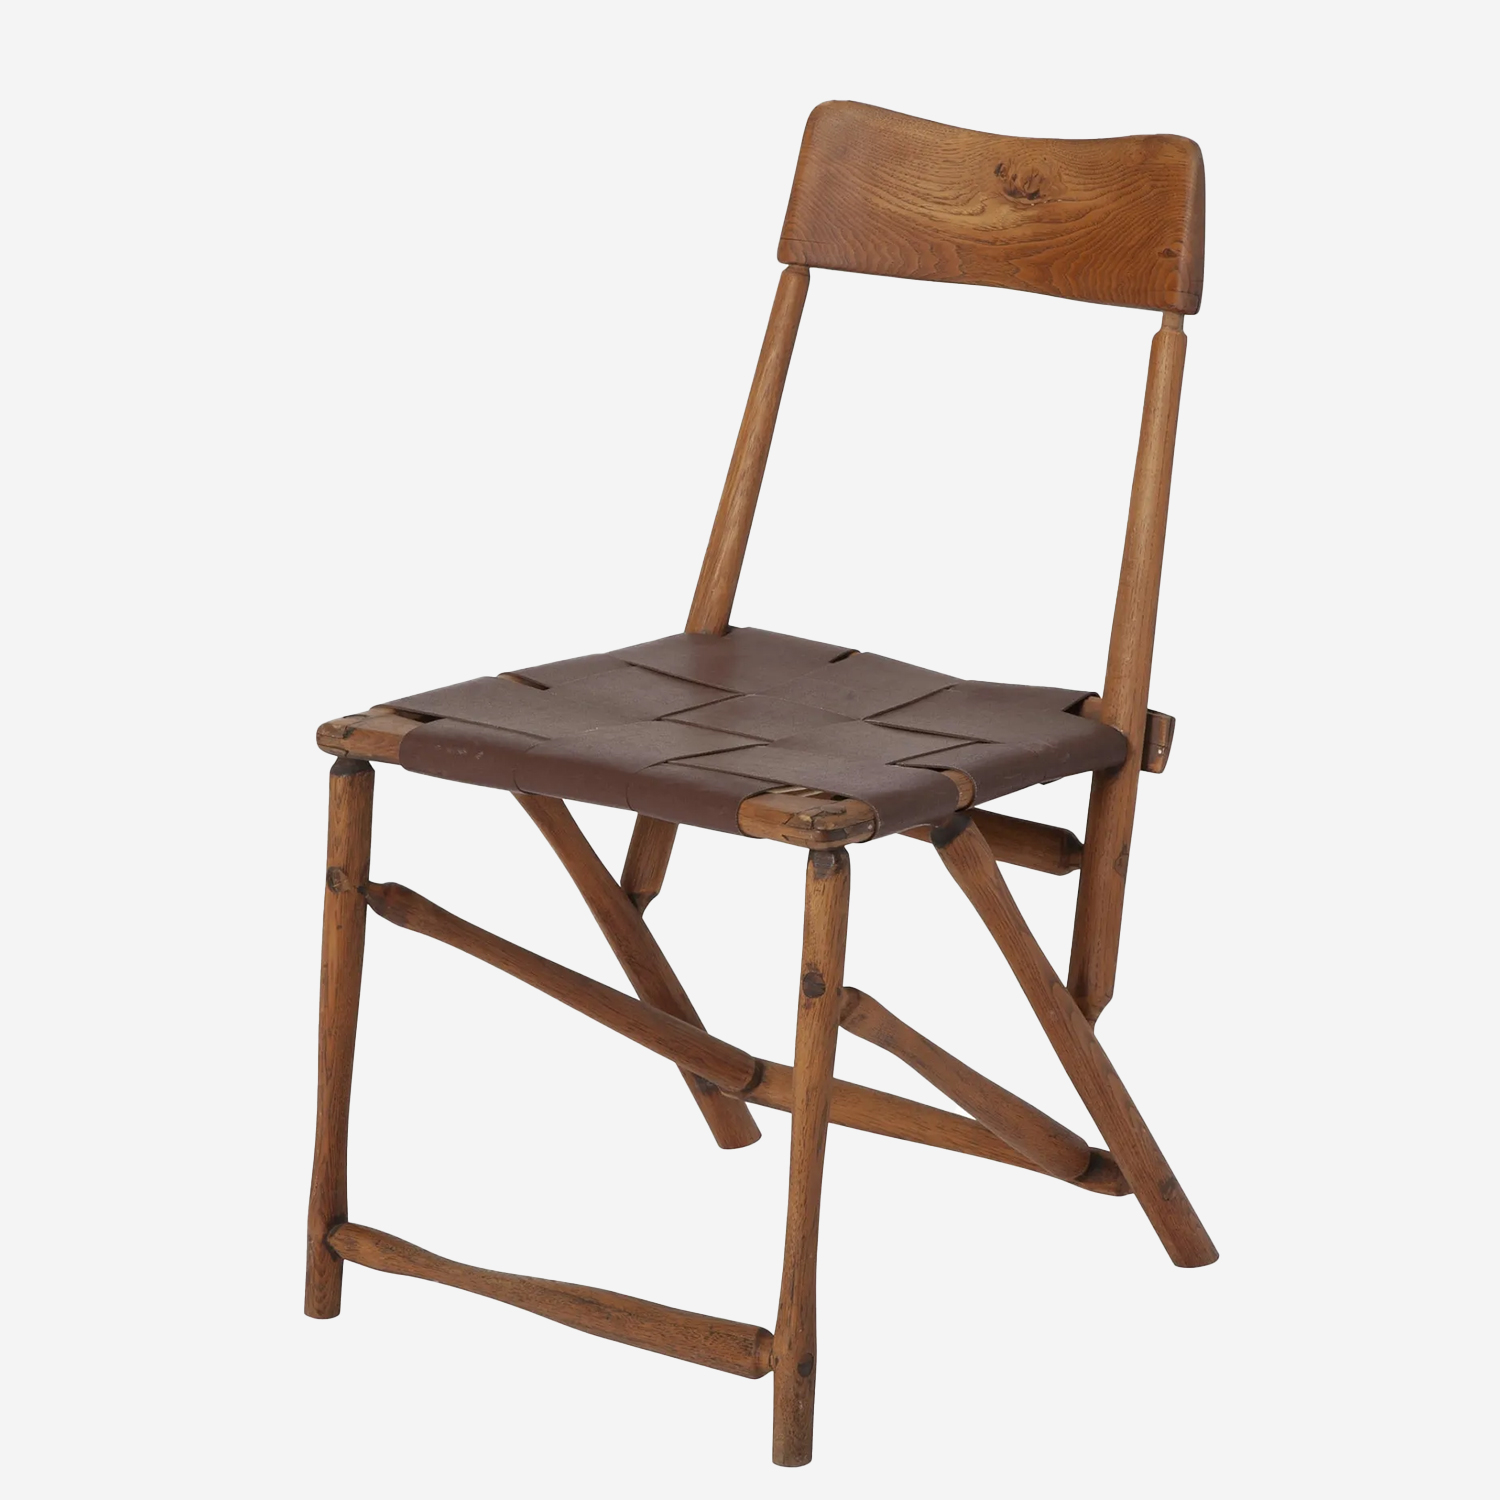 Wharton Esherick - Hammer Handle Chair